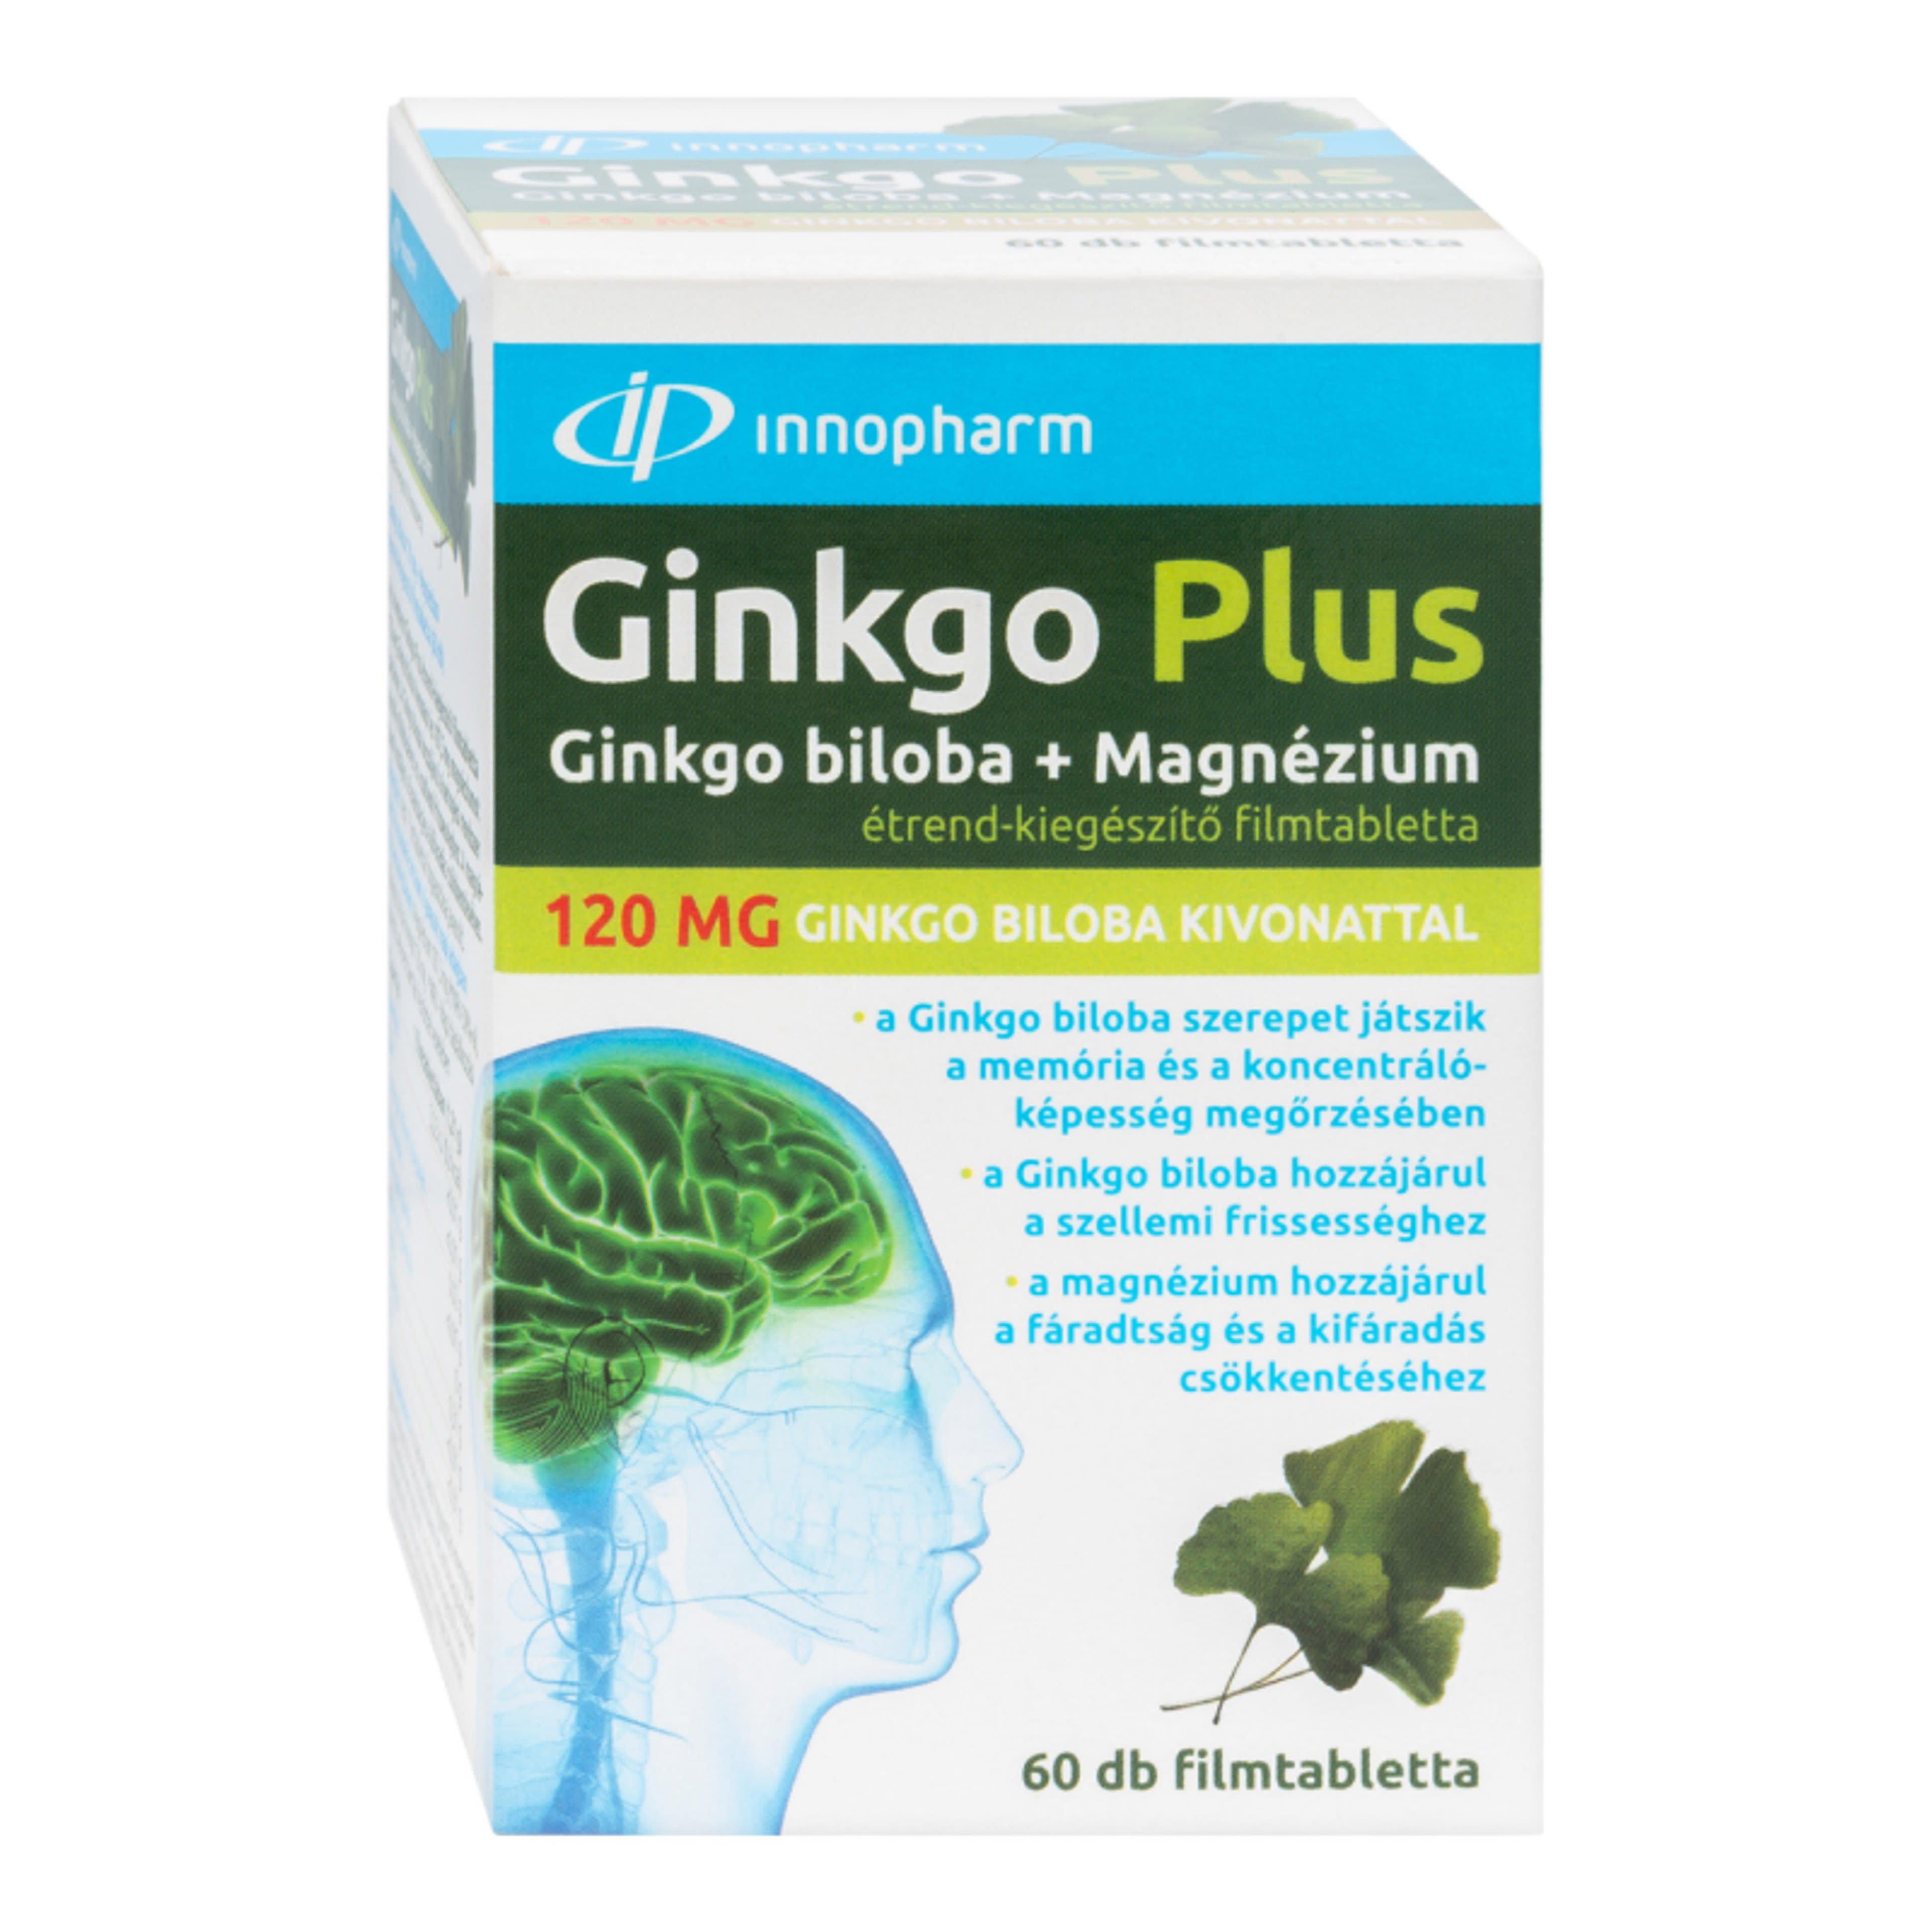 InnoPharm Ginkgo Plus Ginkgo biloba 120 mg + magnézium filmtabletta - 60 db-3